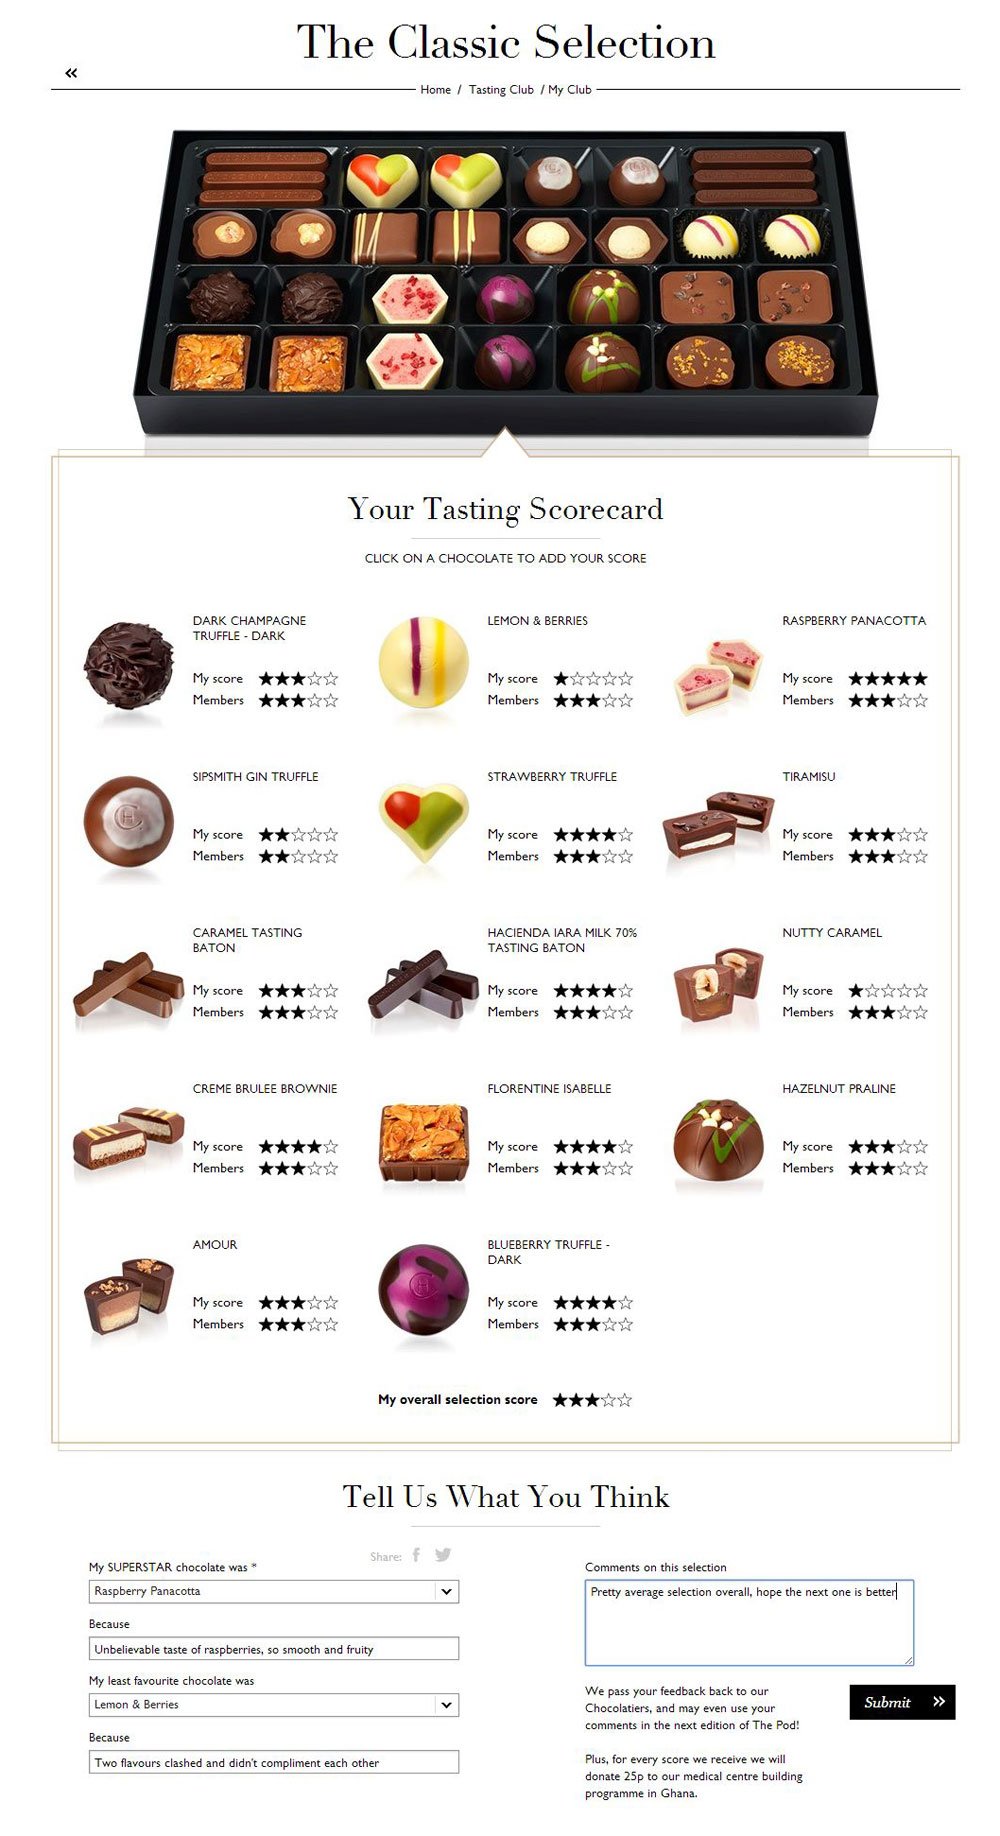 Hotel Chocolat's Tasting Club chocolate scoring